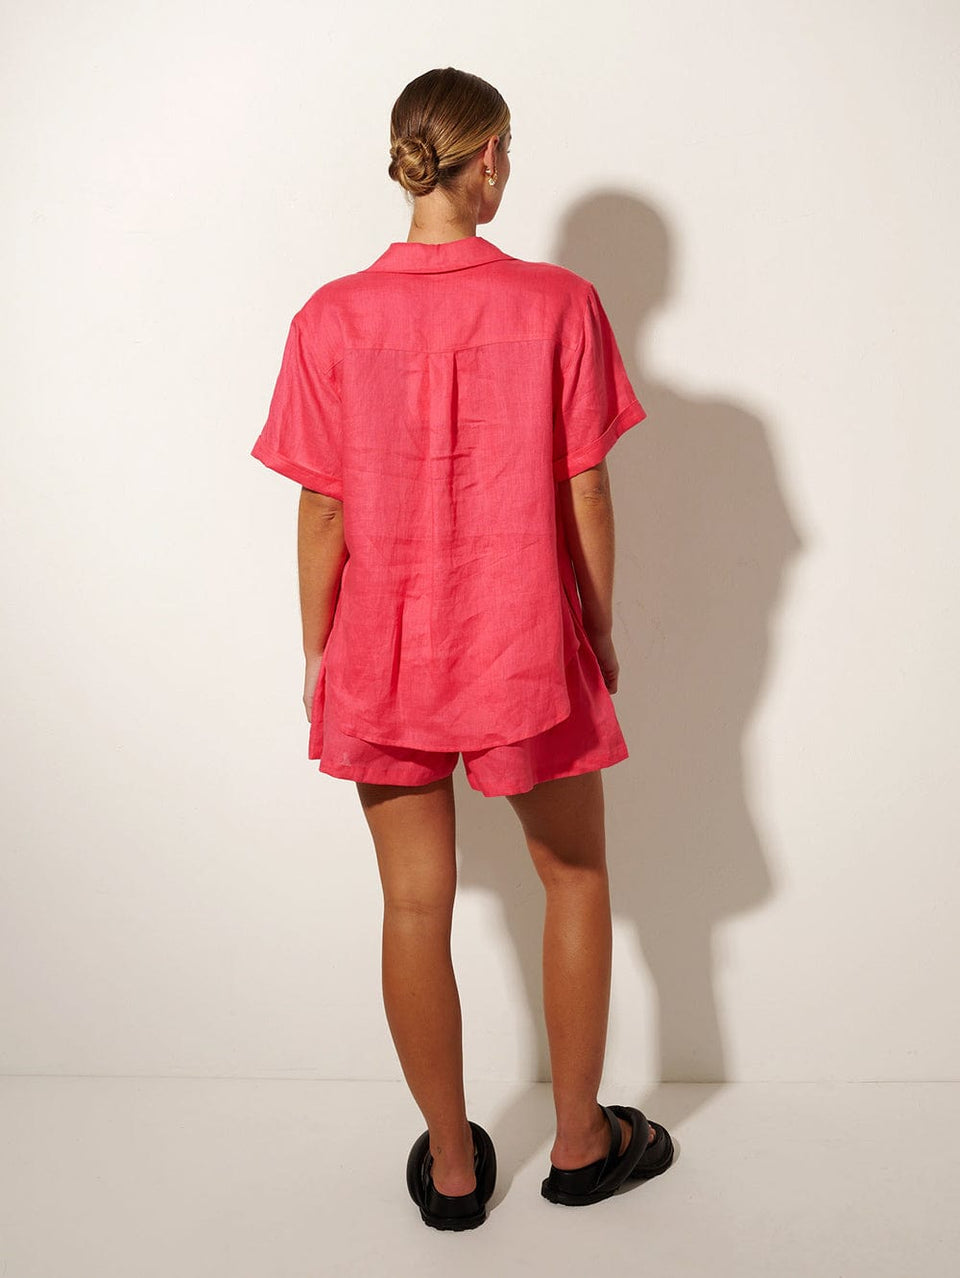 KIVARI Eve Shirt | Model wearing Pink Shirt Back View